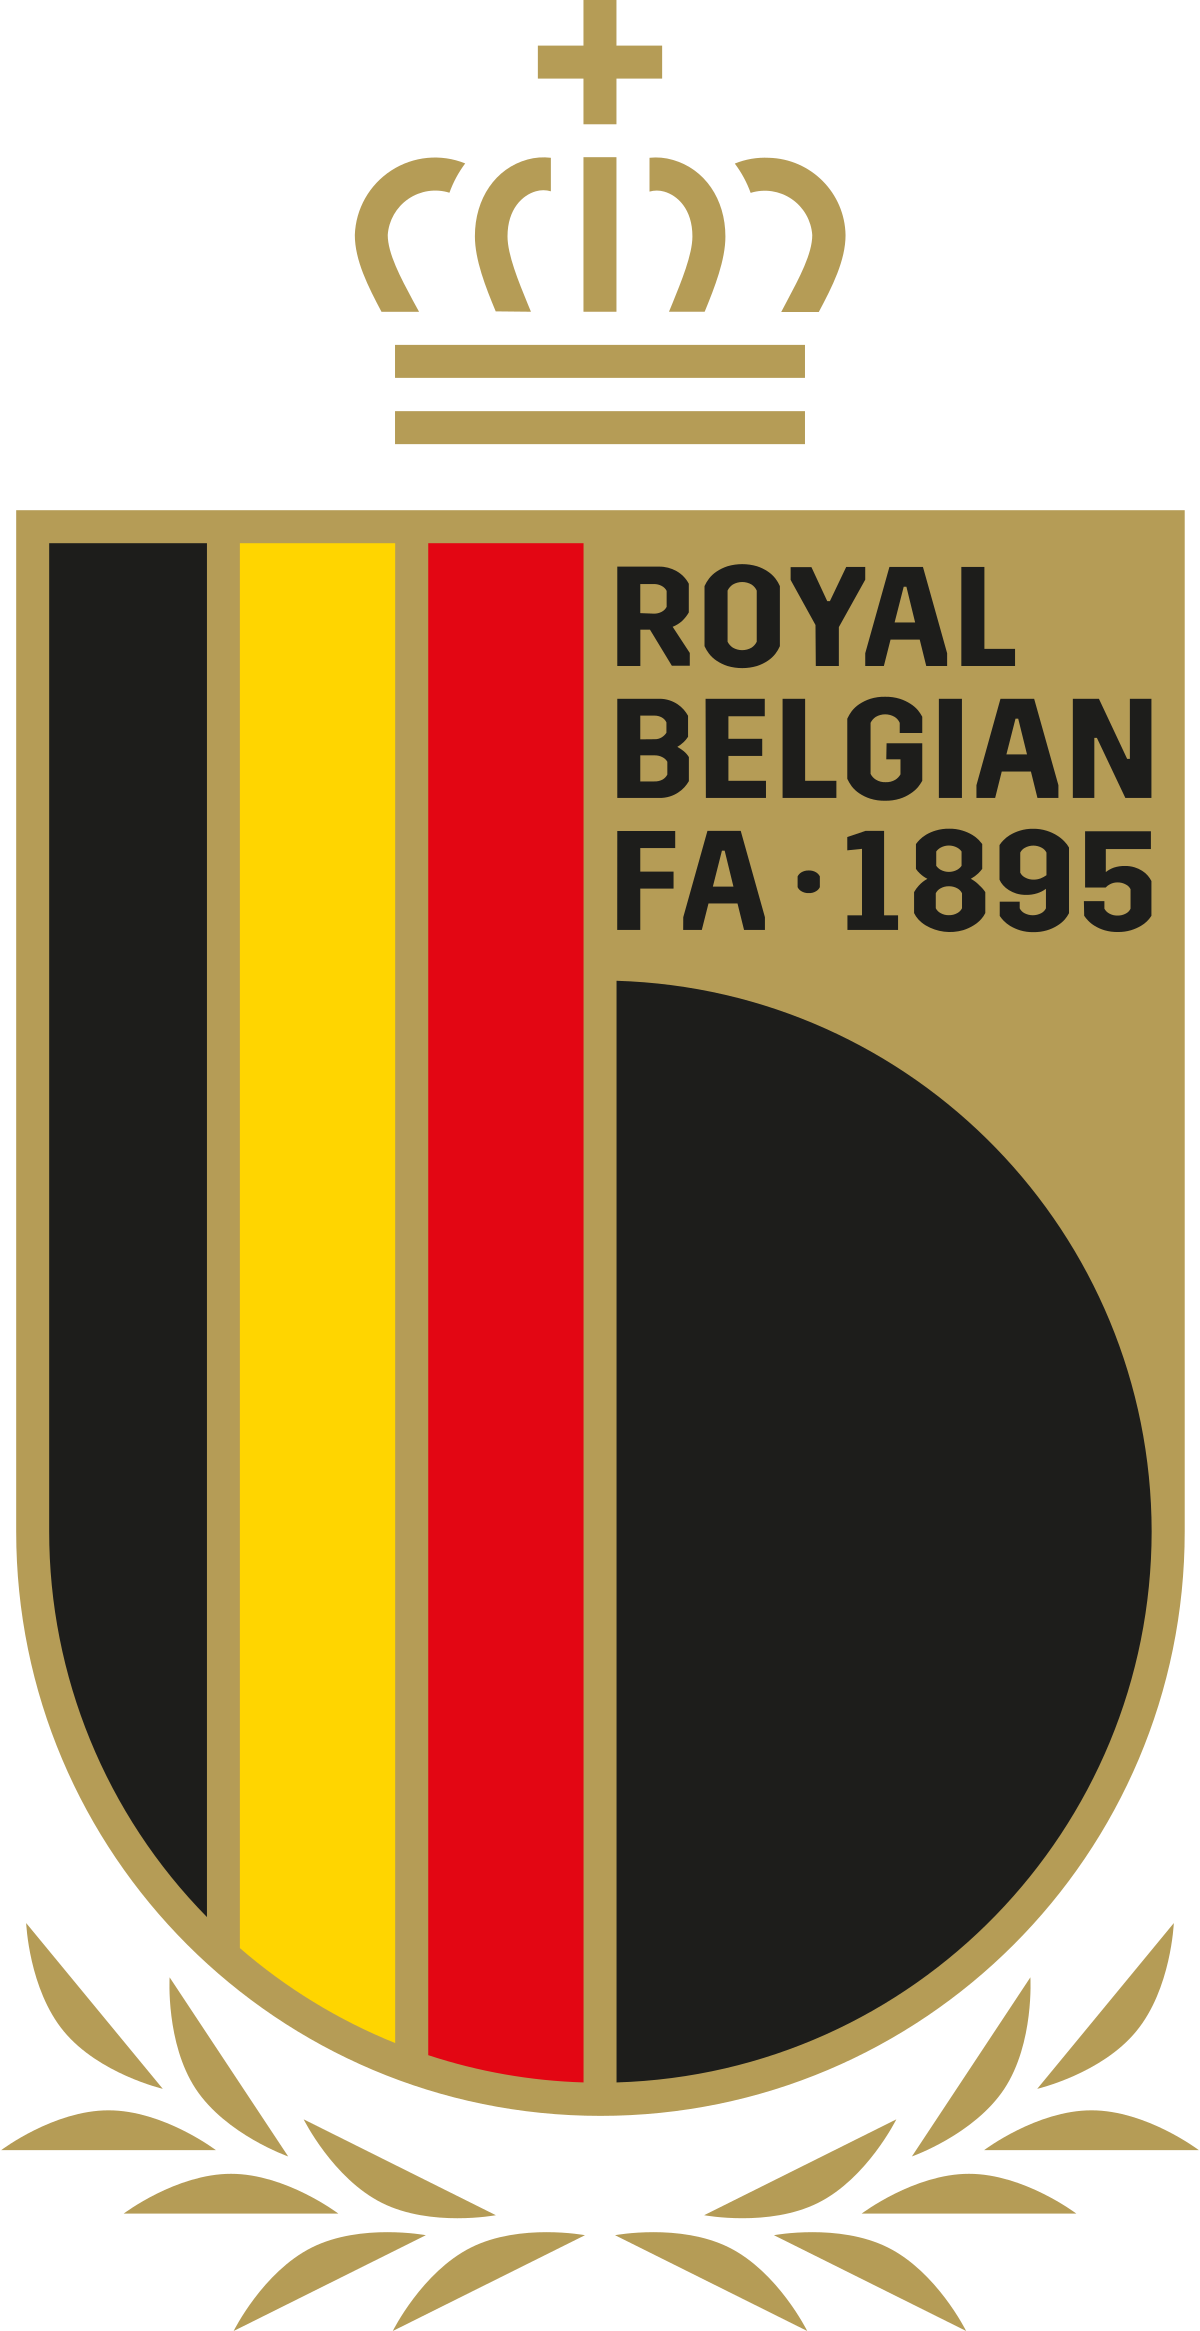 Royal Belgian Football Association - Wikipedia